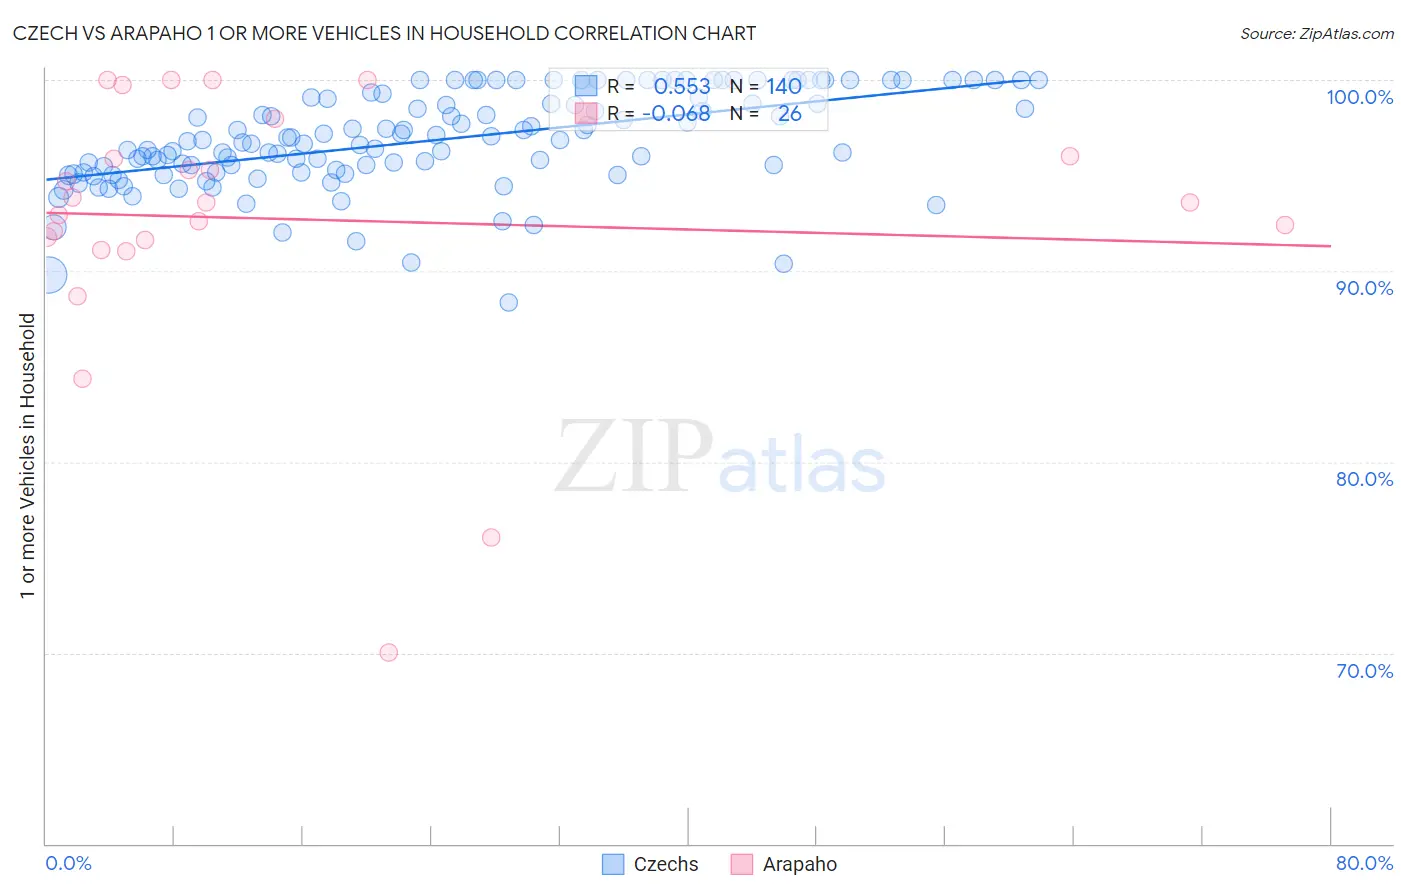 Czech vs Arapaho 1 or more Vehicles in Household